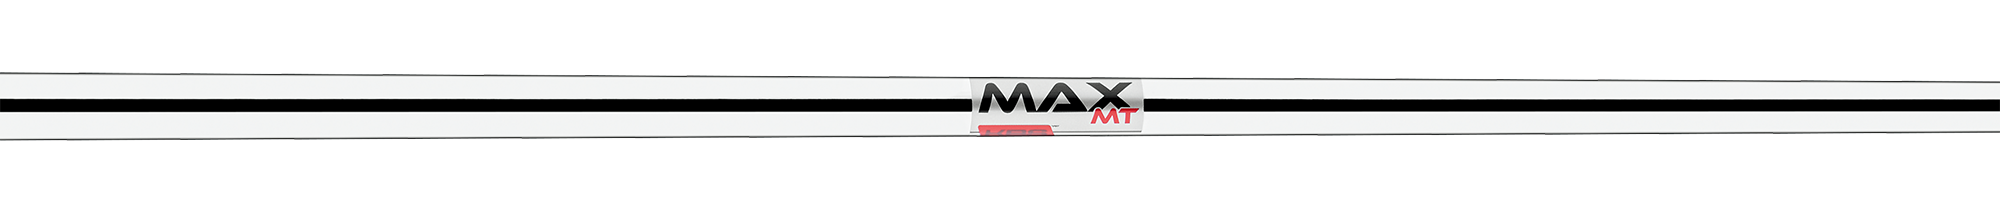 SIM2 MAX レスキュー | SIM2 MAX Rescue | TaylorMade Golf